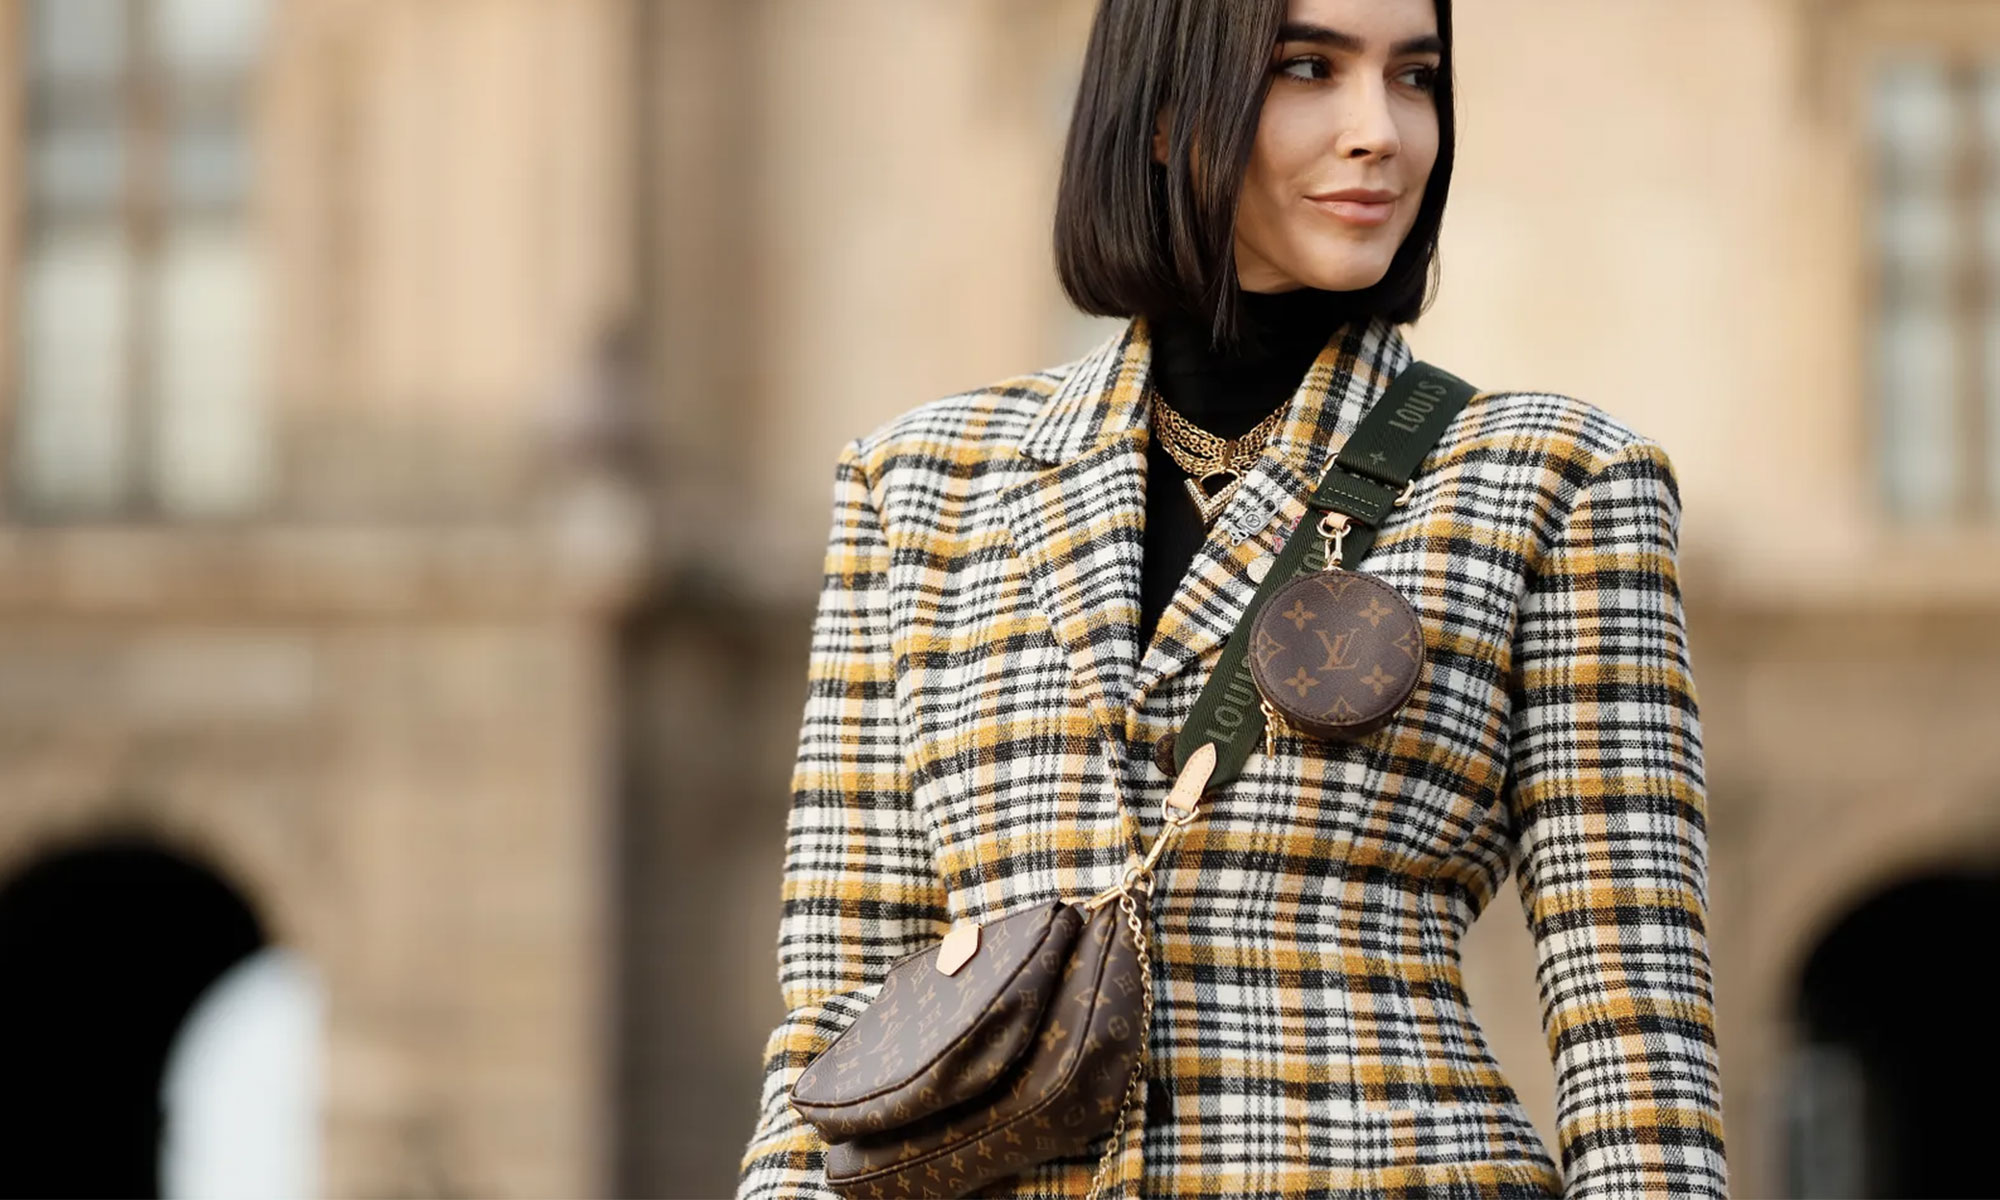 Todo sobre el Louis Vuitton Multi-Pochette ¿Vale la Pena? – Moneyshop Blog